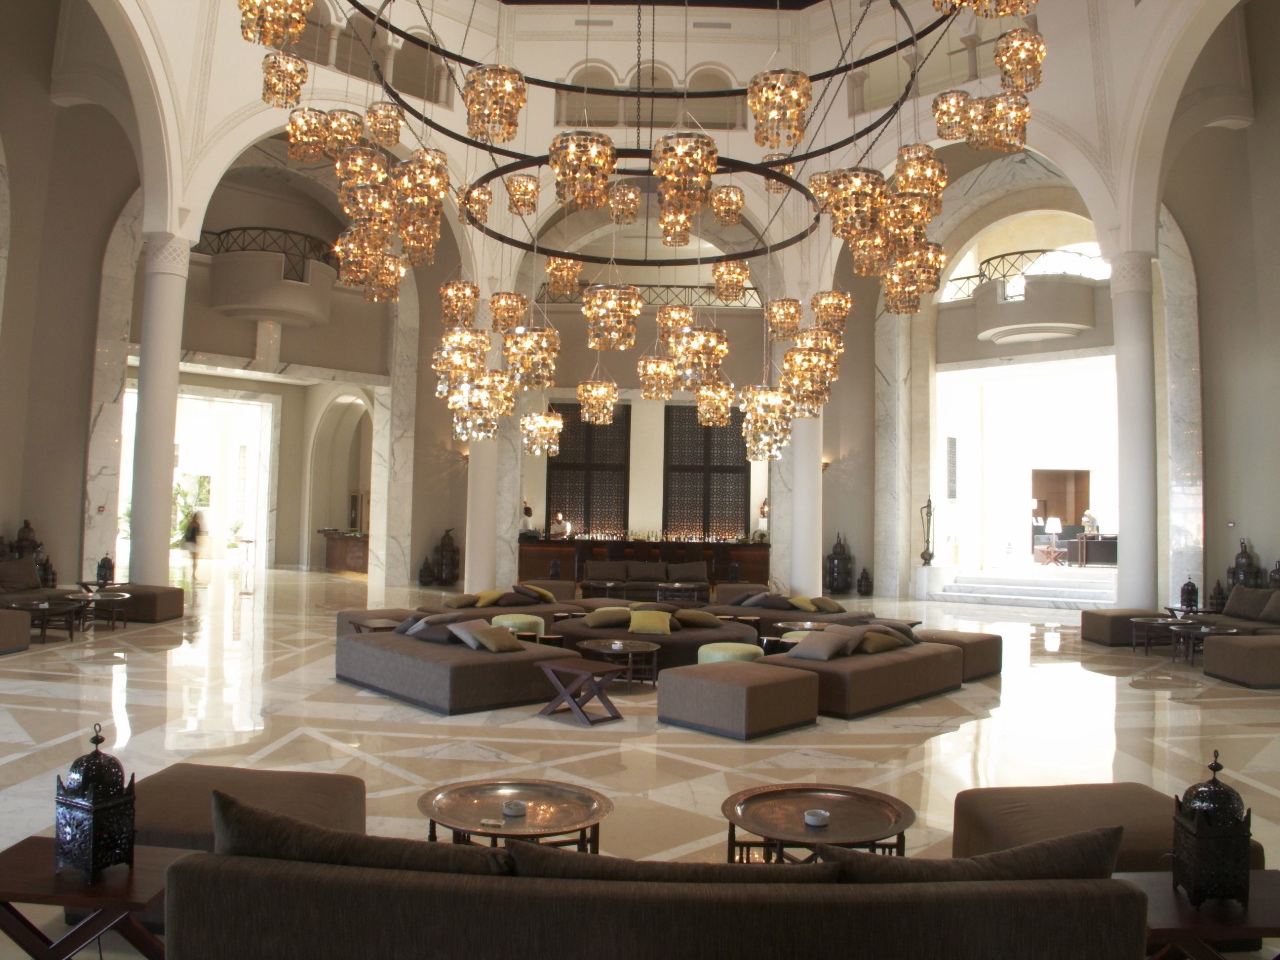 MediaCom and DAT Provide Full HARMAN Upgrade To Luxury Radisson BLU Hotel In Tunisia 